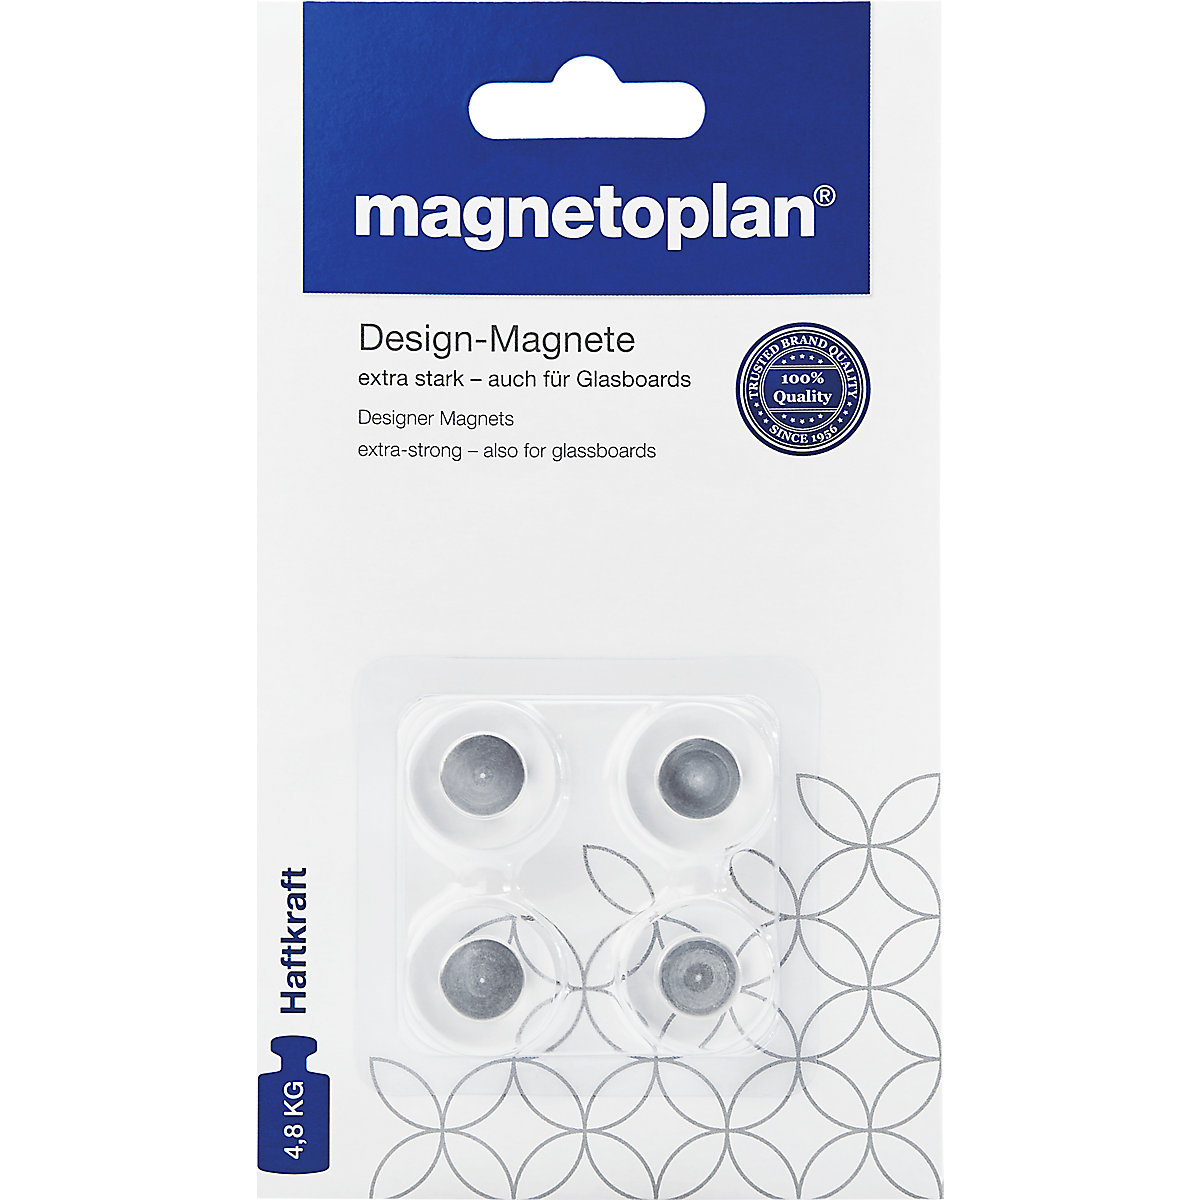 Plot magnétique design – magnetoplan